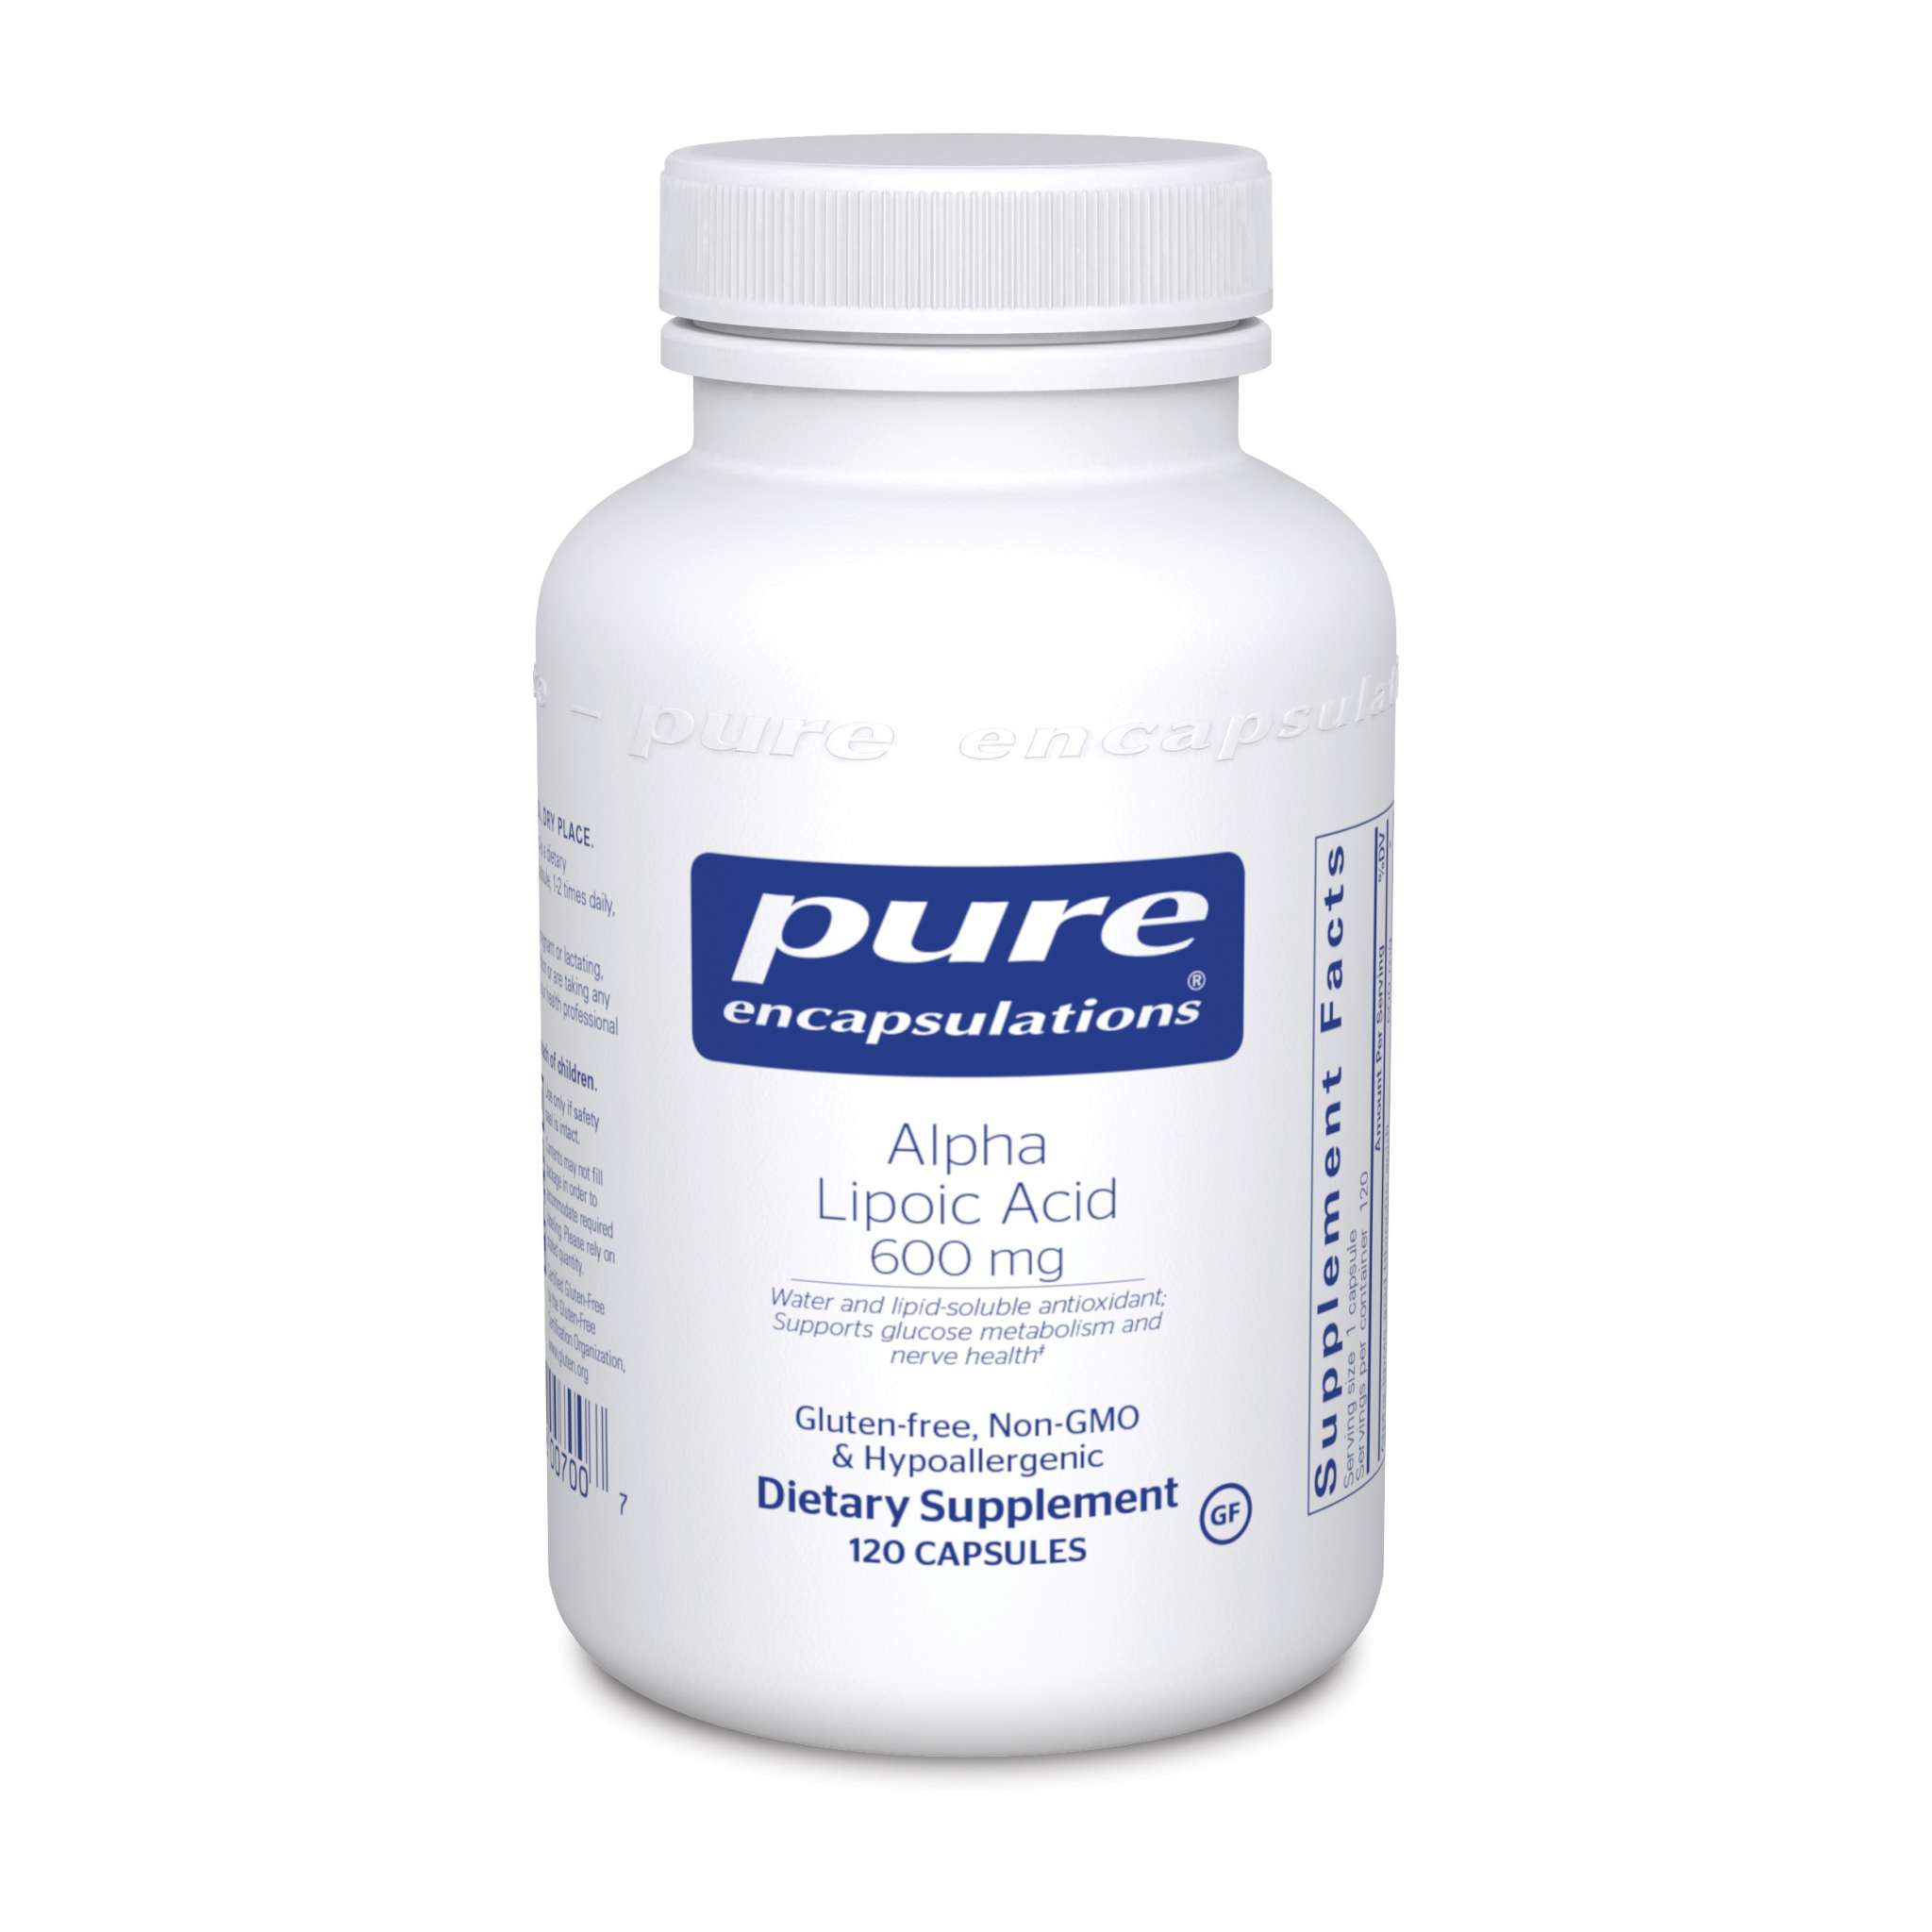 Pure Encapsulations - Lipoic Acid 600 mg Alpha